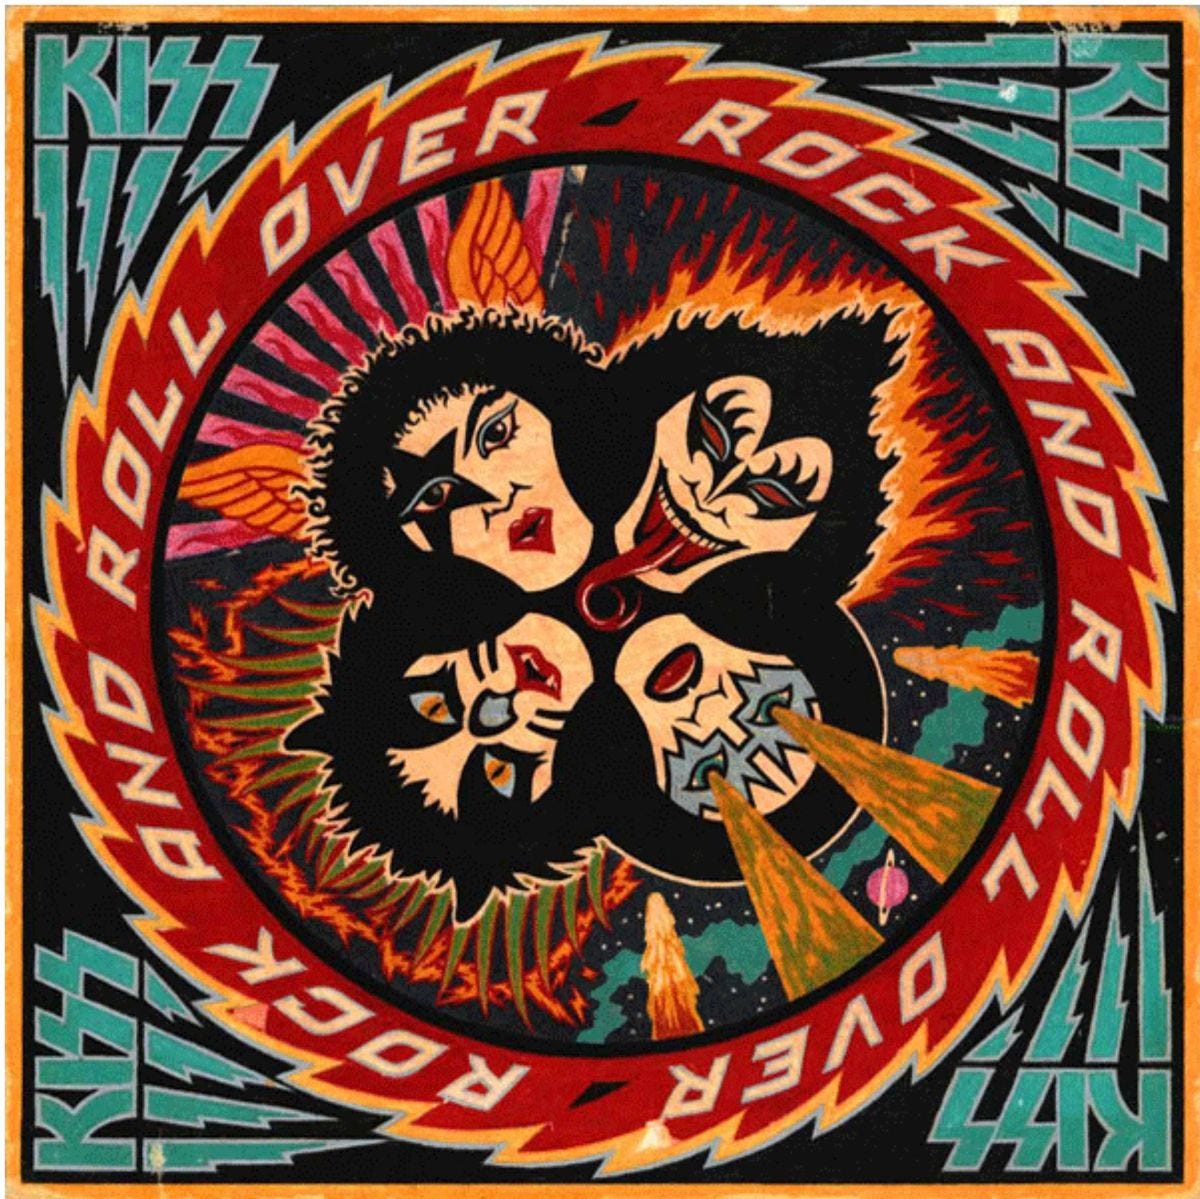 Lot Detail - KISS “Rock and Roll Over” Original Album Cover Artwork